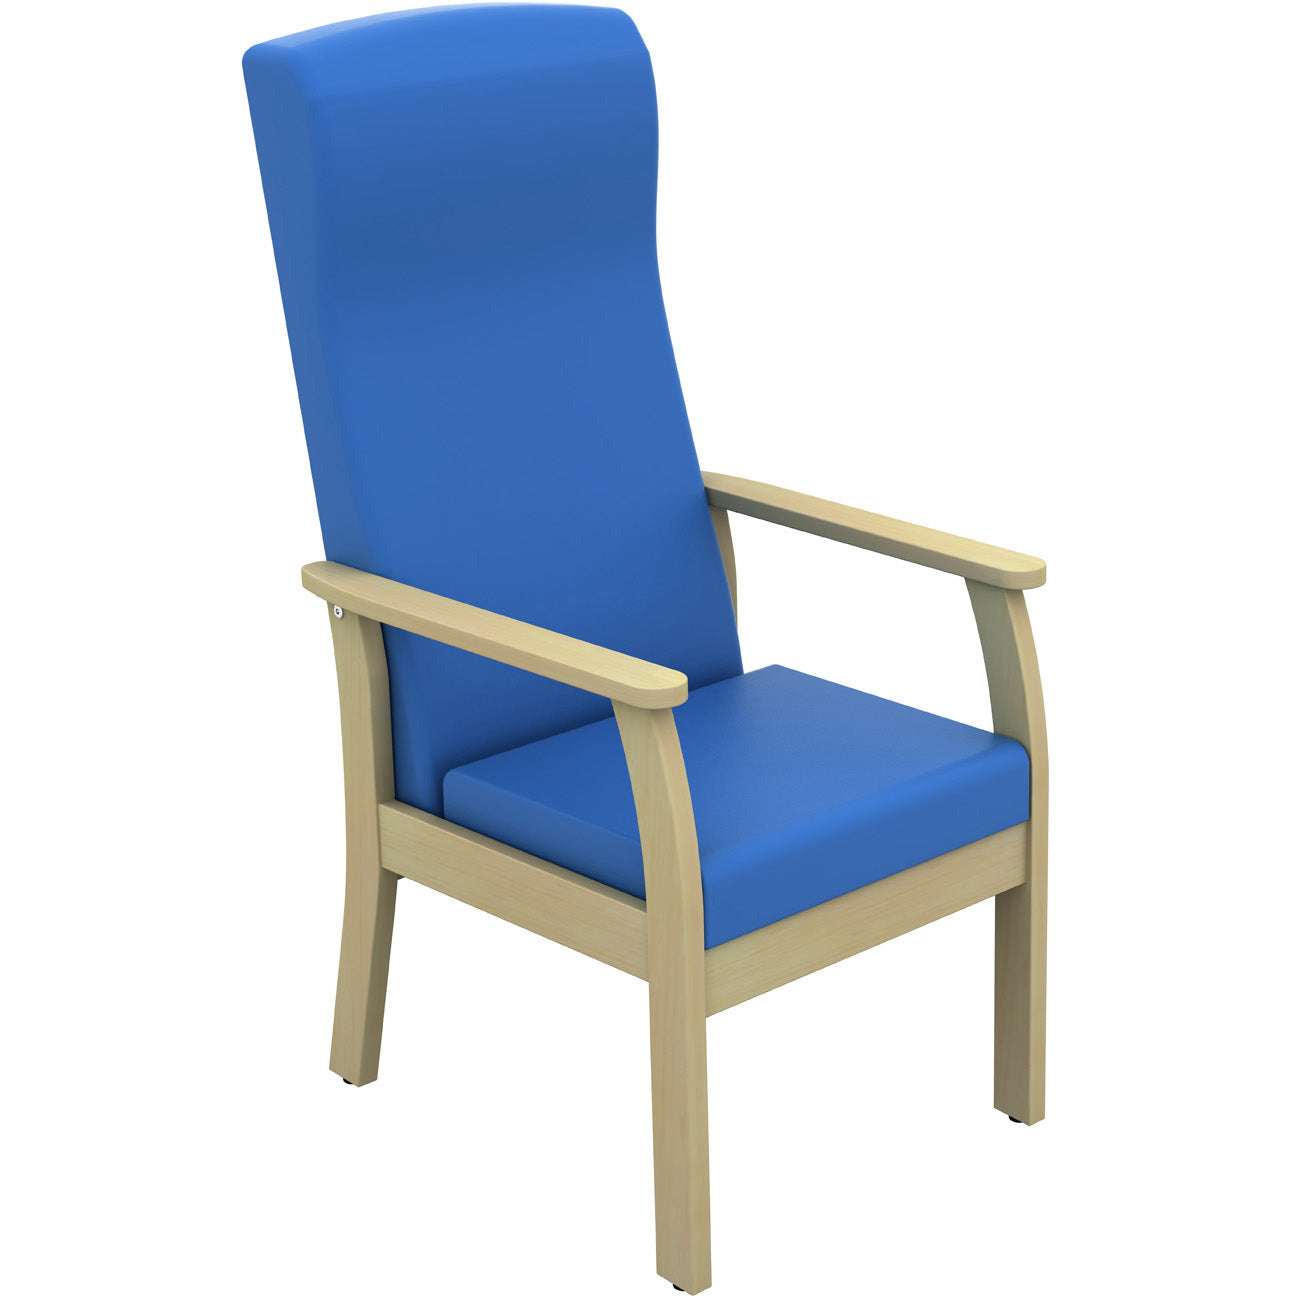 Sunflower Atlas High-Back Patient Chair - Vinyl Upholstery